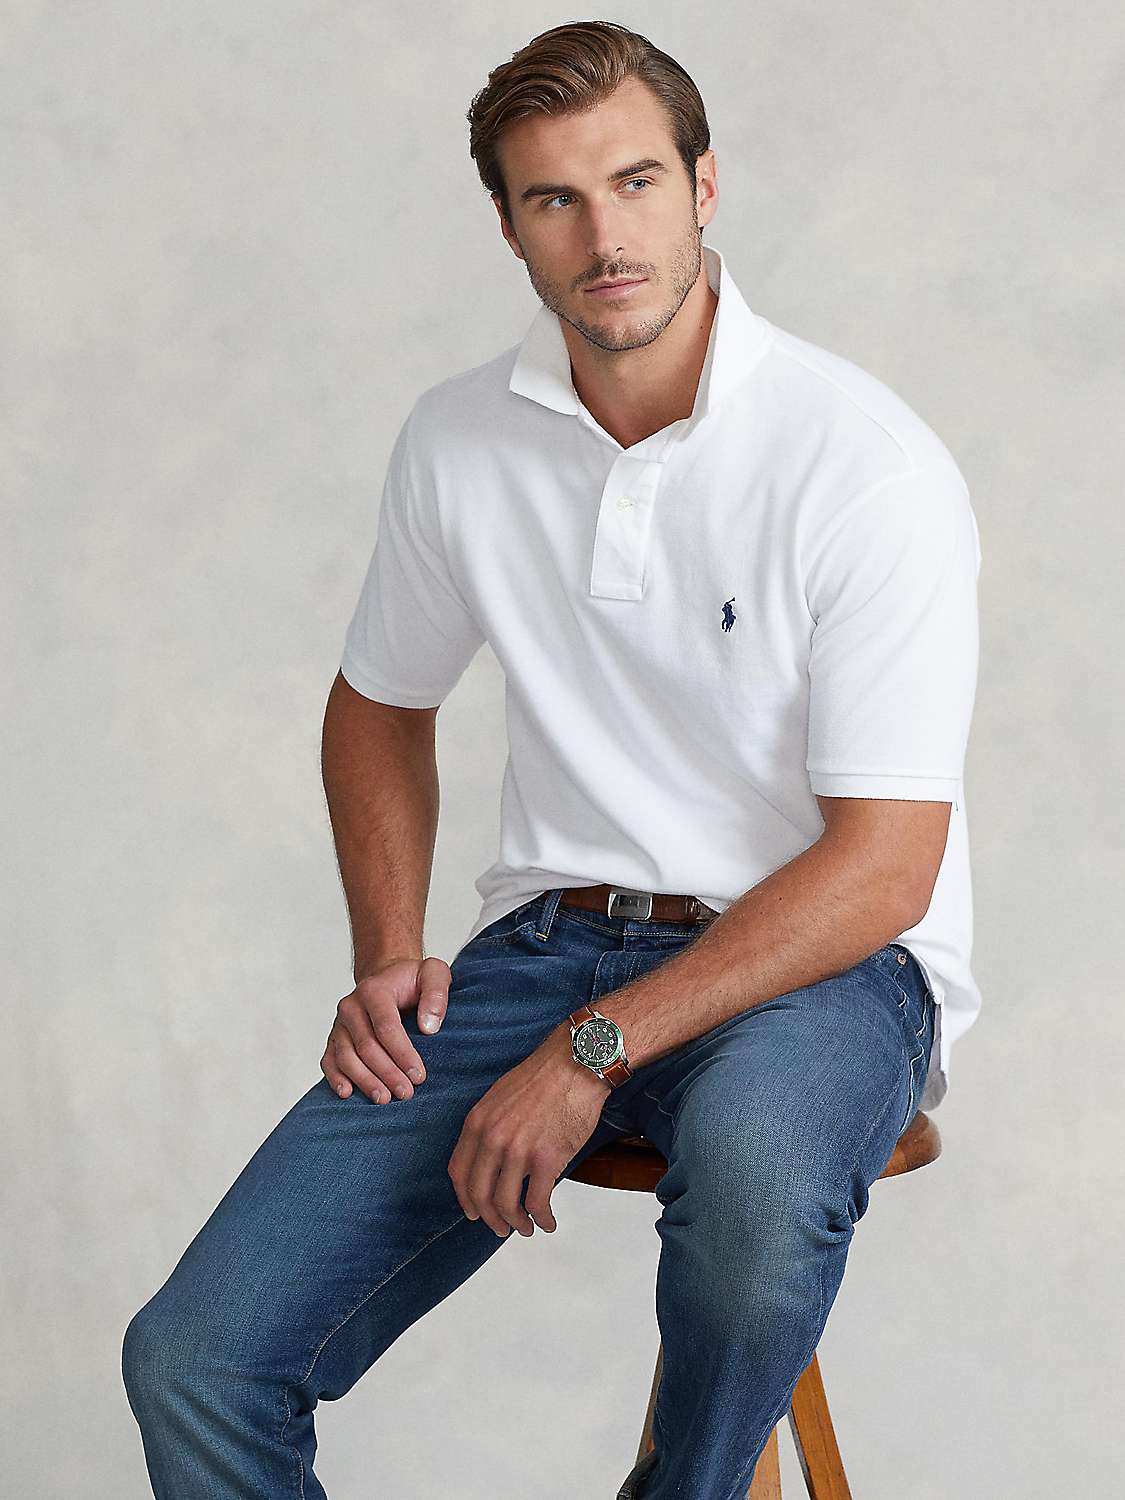 Buy Polo Ralph Lauren Big & Tall Regular Fit Polo Shirt Online at johnlewis.com